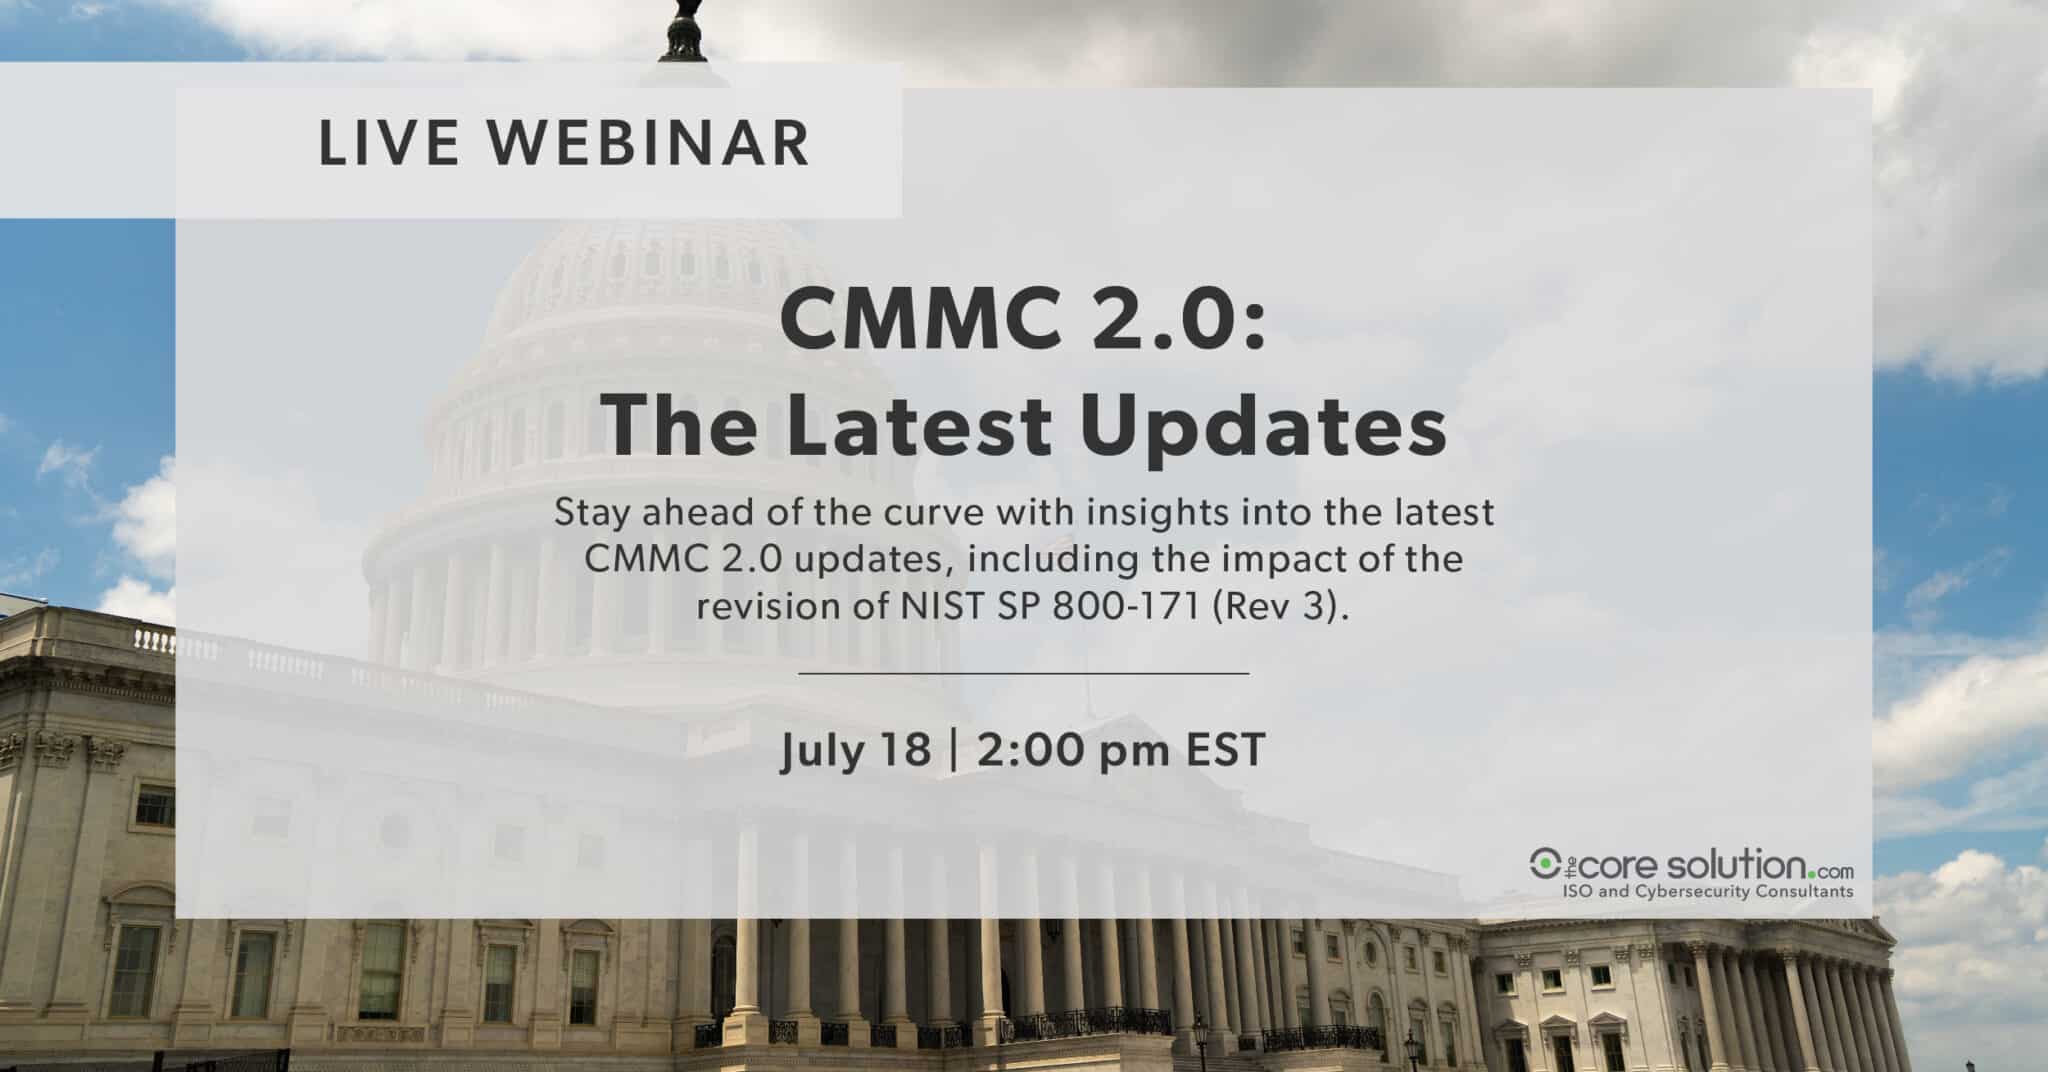 CMMC 2.0: The Latest Updates